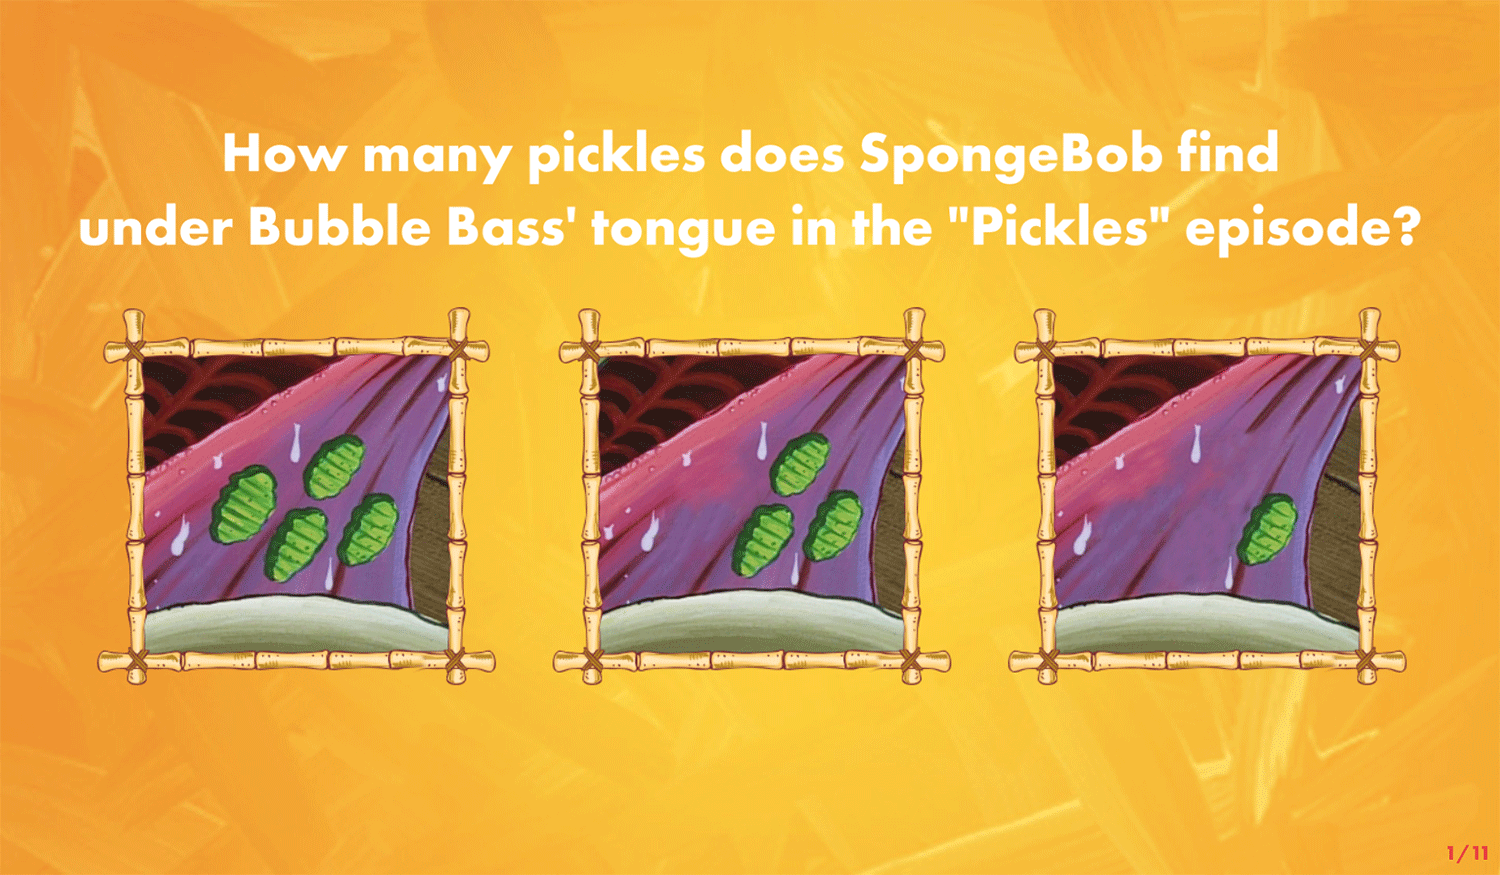 Spongebob Squarepants The Ultimate Krabby Patty Challenge 1st Question Screenshot.